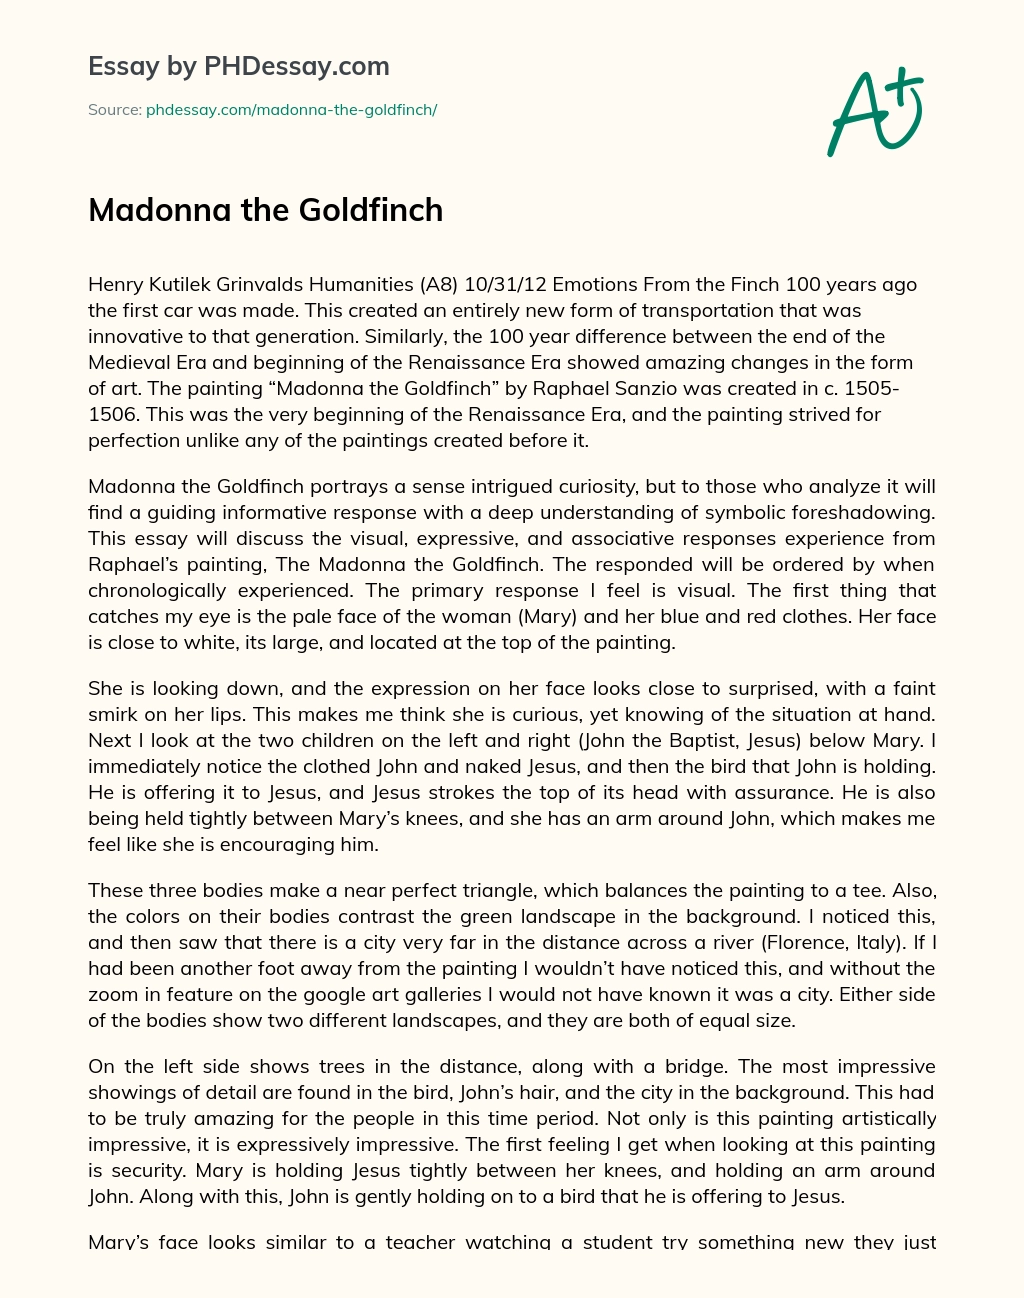 Madonna the Goldfinch essay